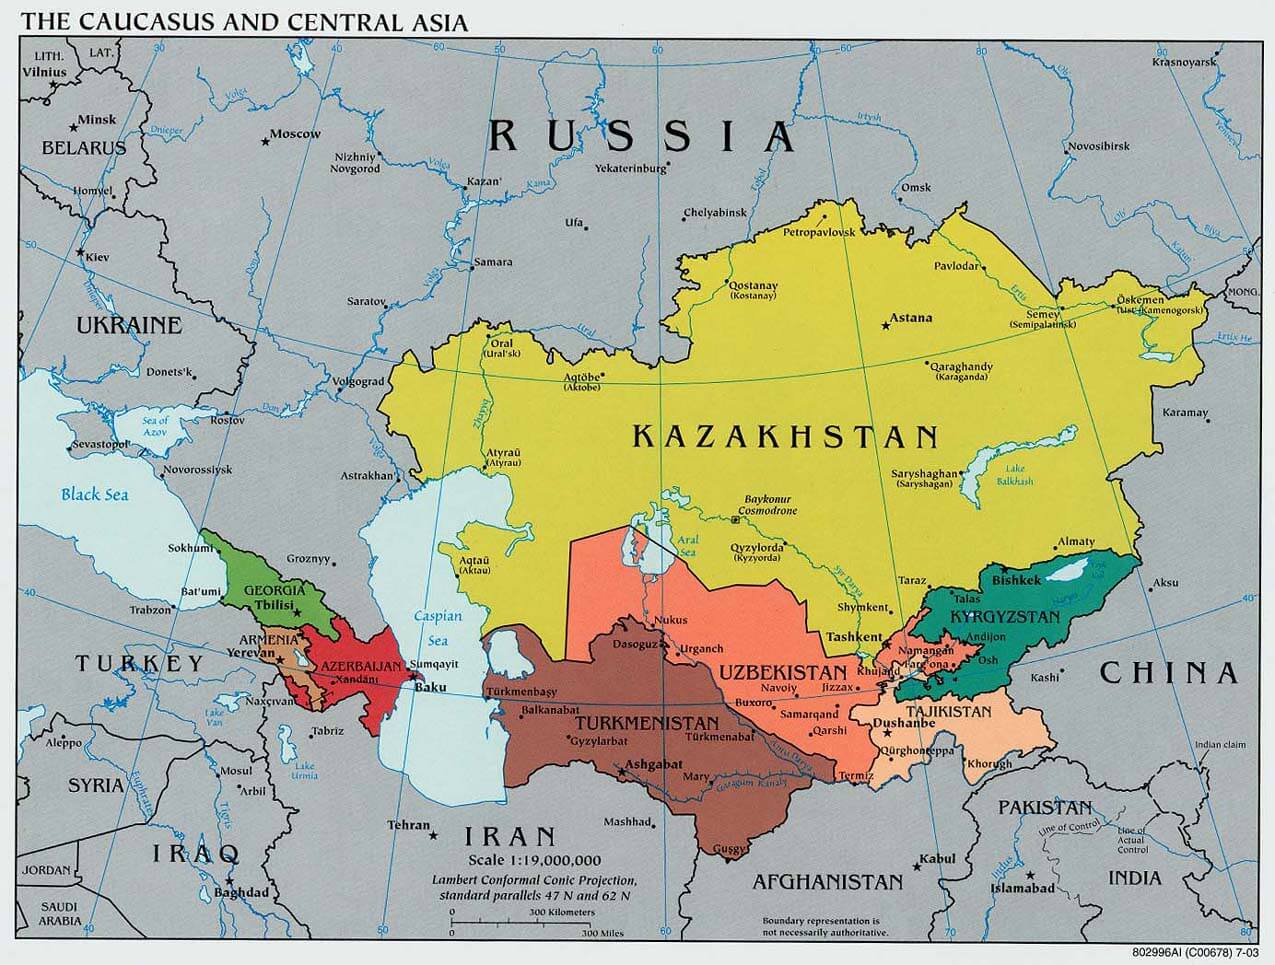 kaukasus zentral asien politisch karte 2003